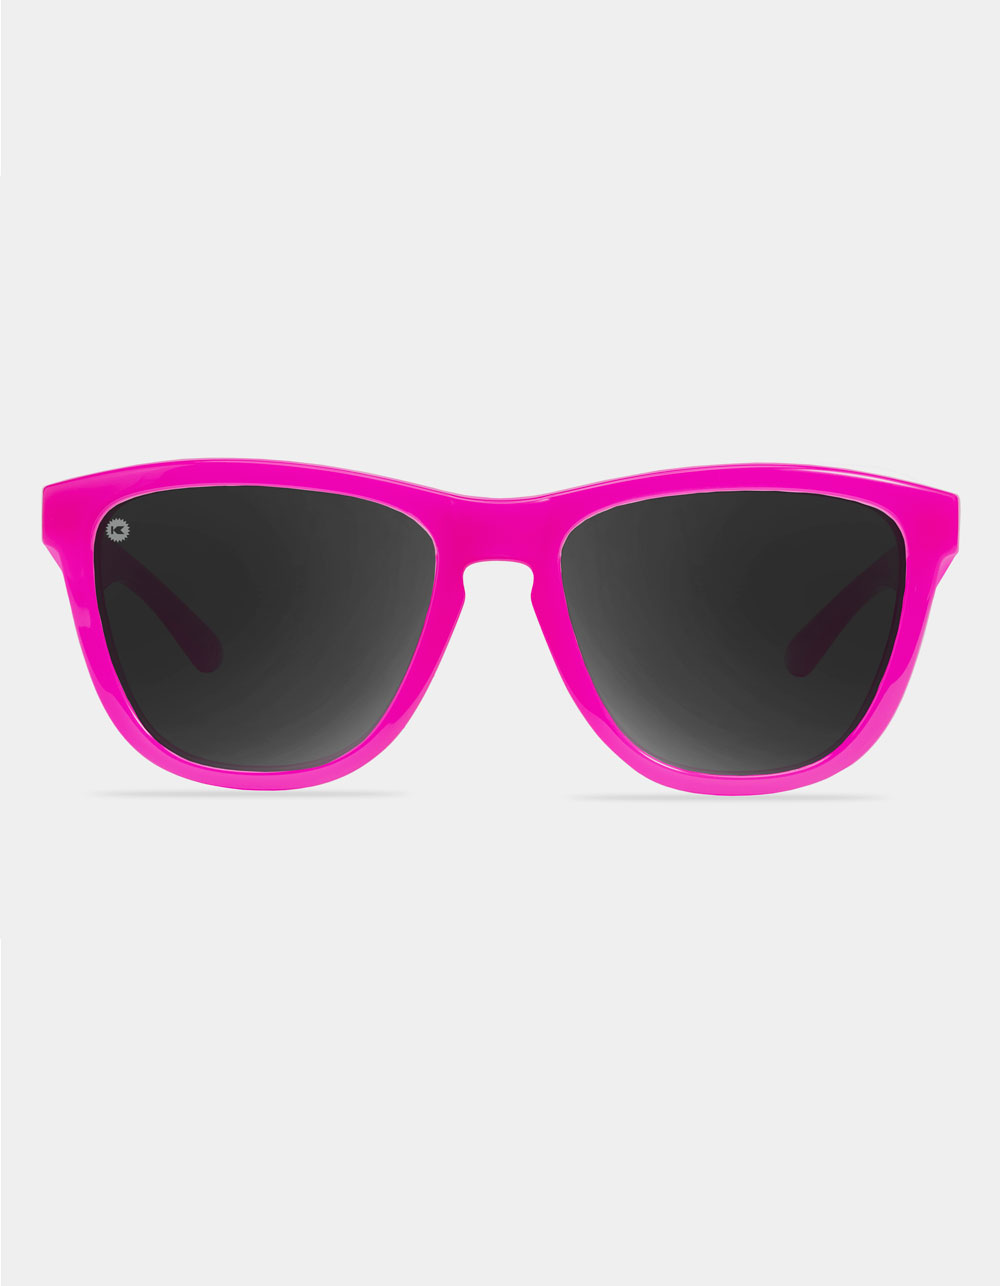 Pink Ribbon Shades 2 Pair of Polarized Bifocal Sunglasses - Outdoor Reading Sunglasses